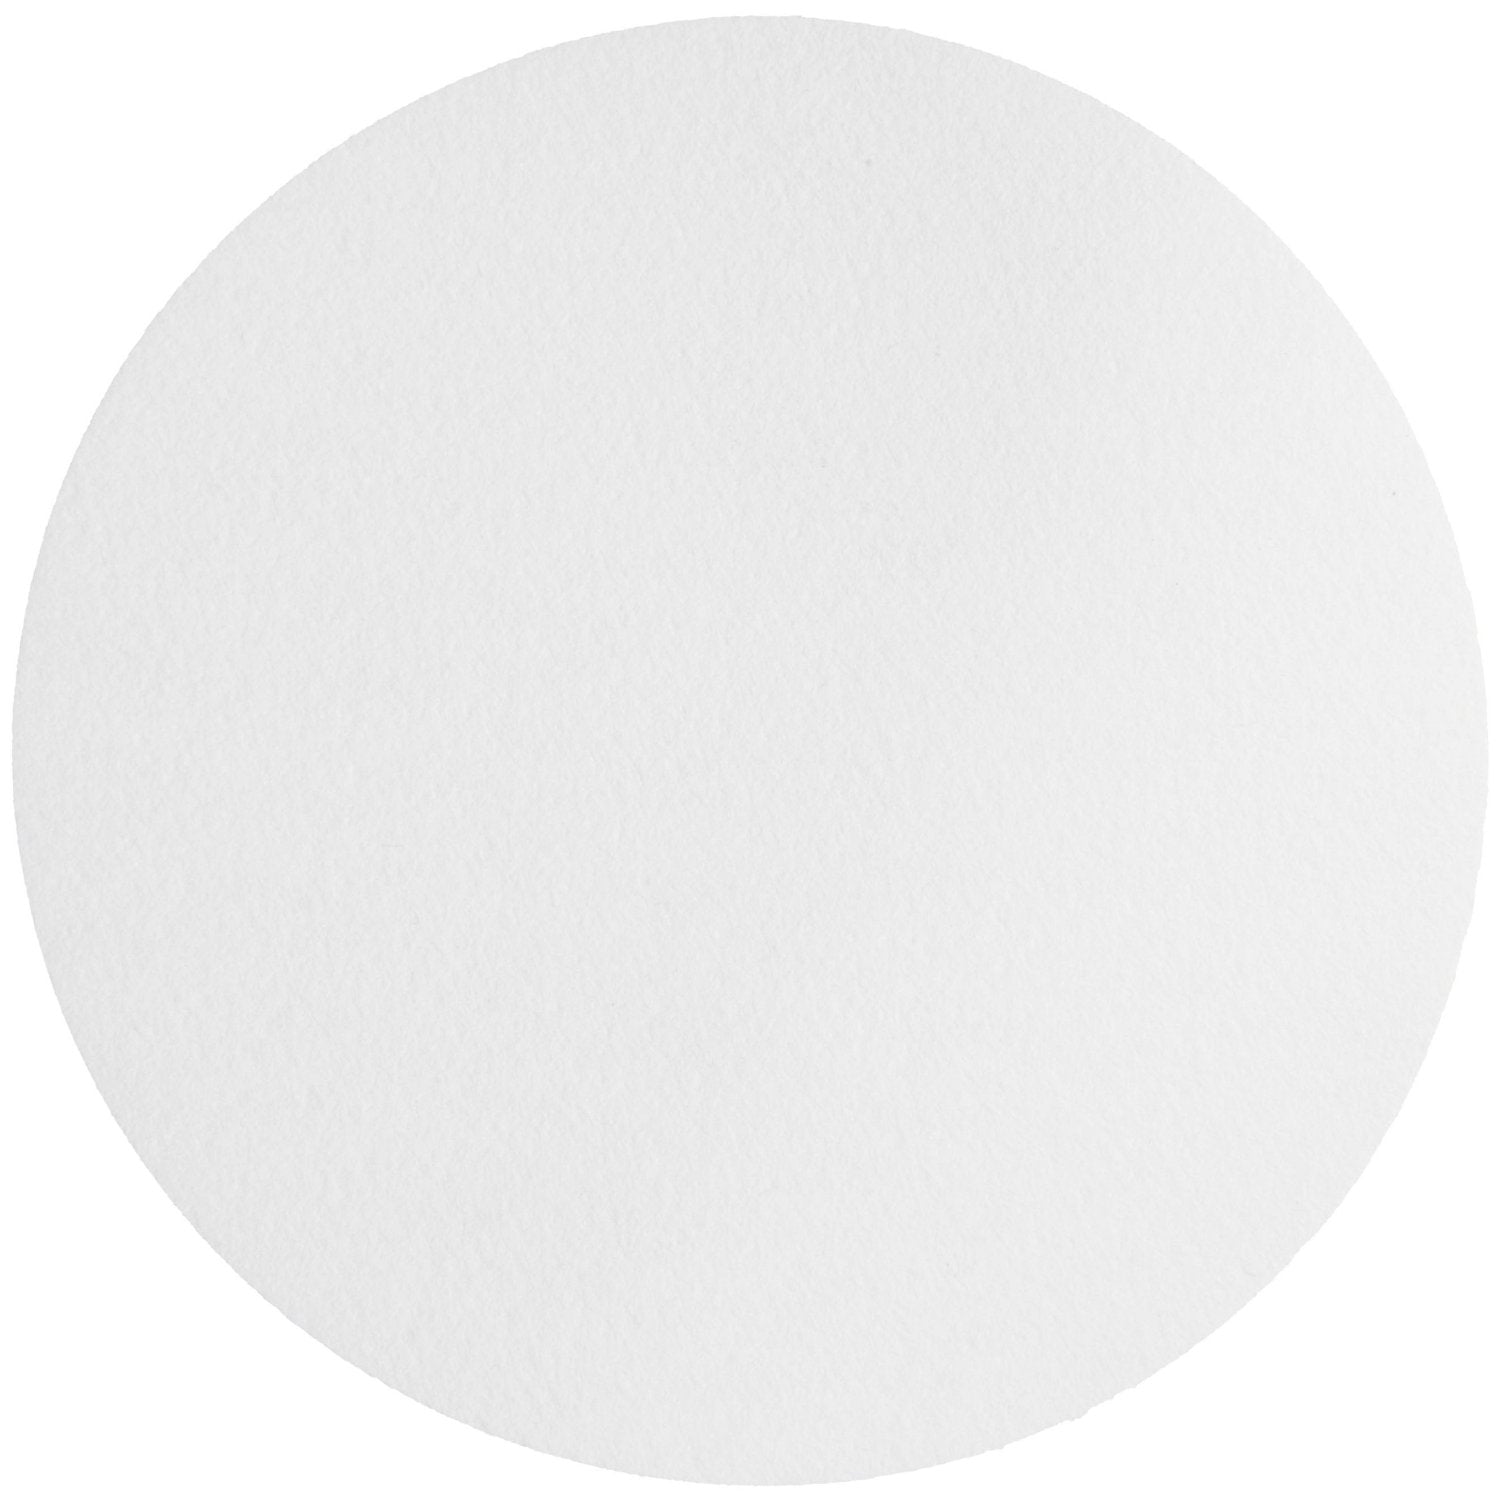 Whatman 7193-004 Cellulose Nitrate, 47mm Dia, 3.0 micrometer Pore Size, Plain White, 100/pk (PN: 7193-004)